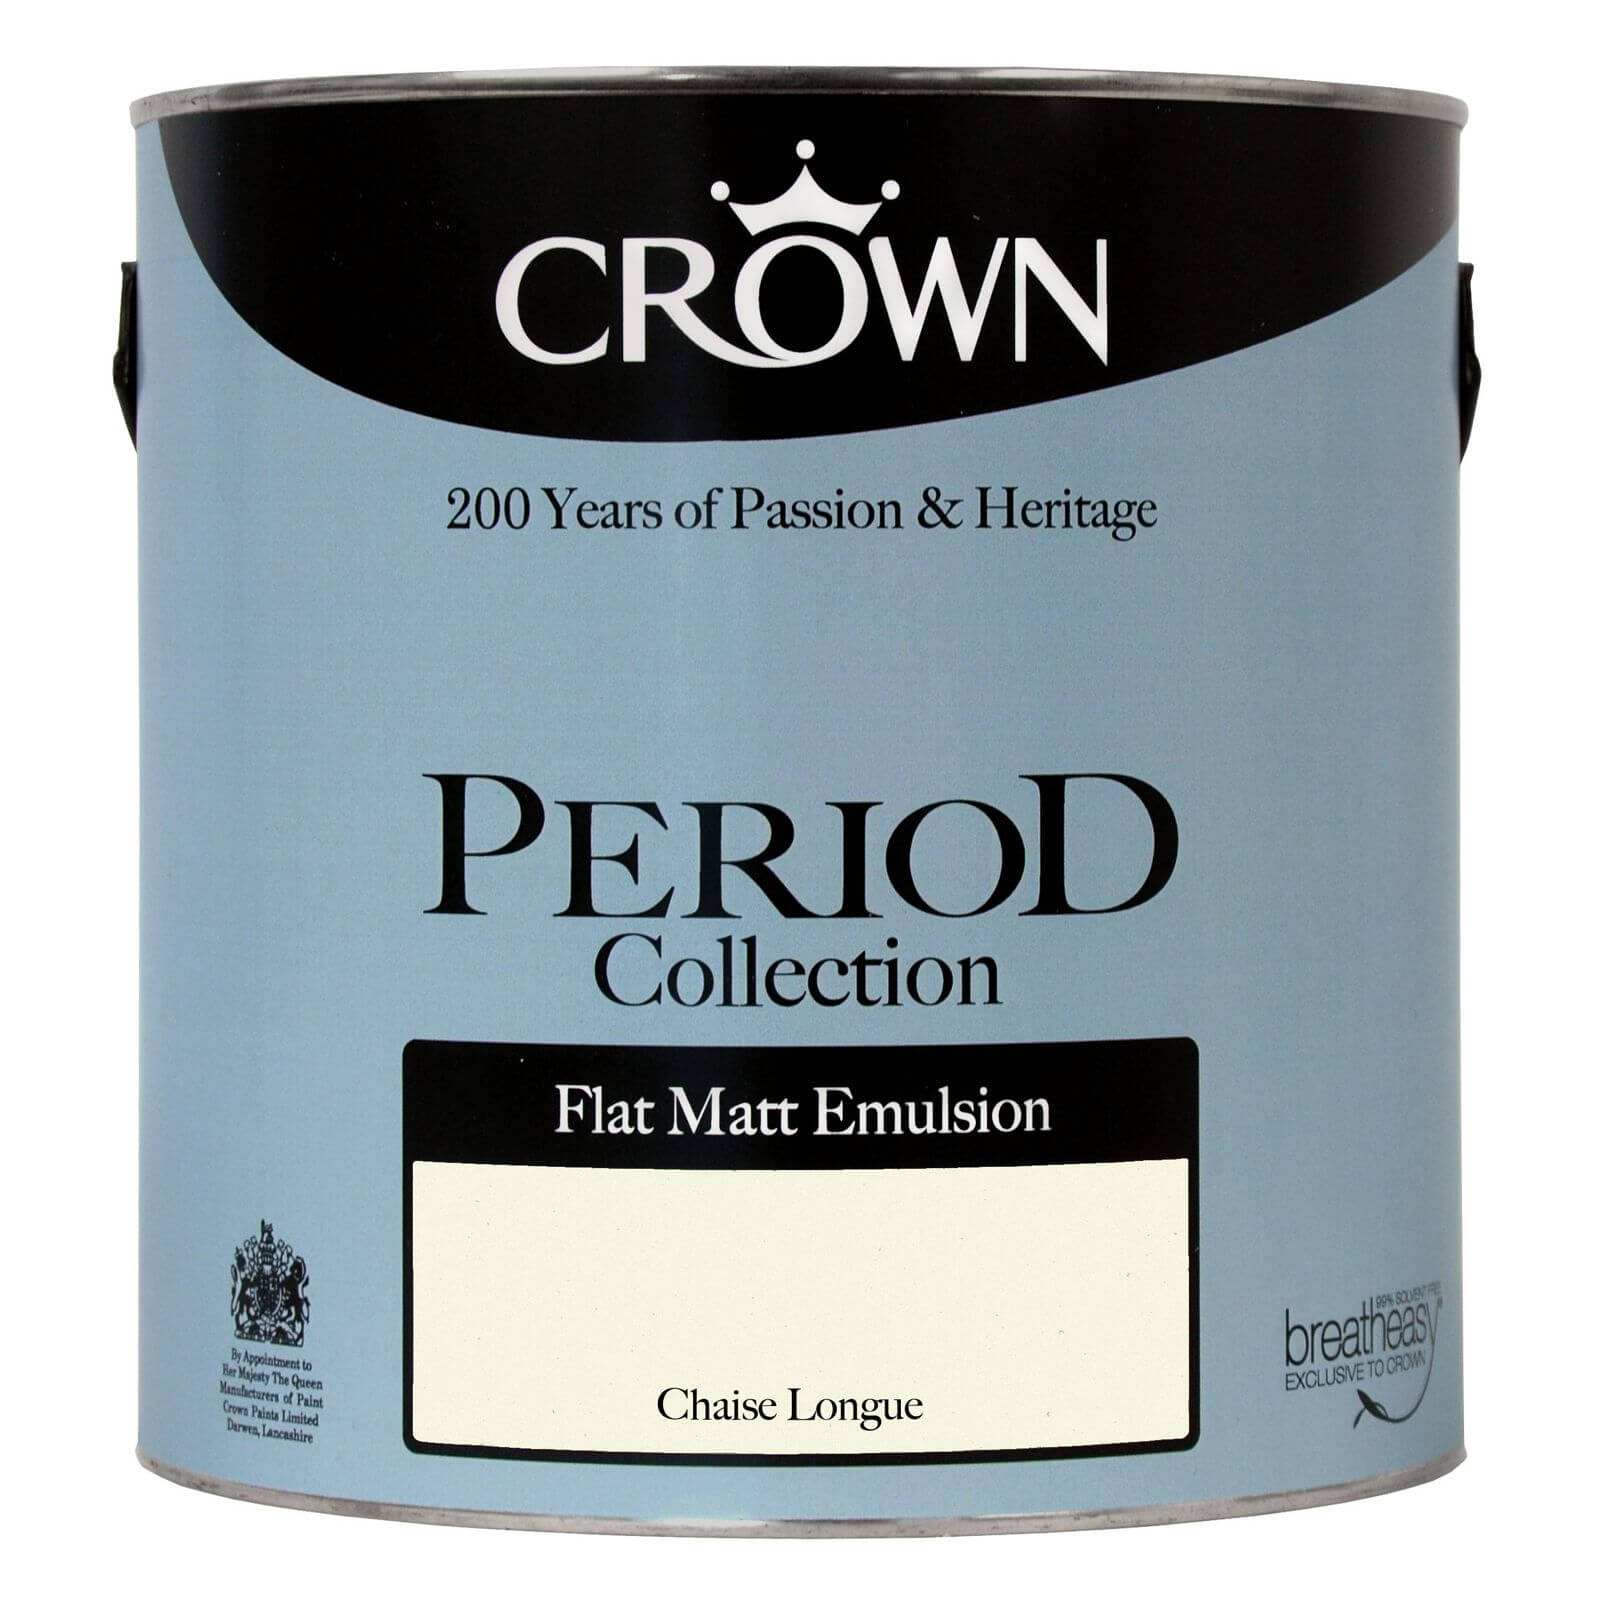 Crown Period Collection Chaise Longue - Flat Matt Emulsion Paint - 40ml